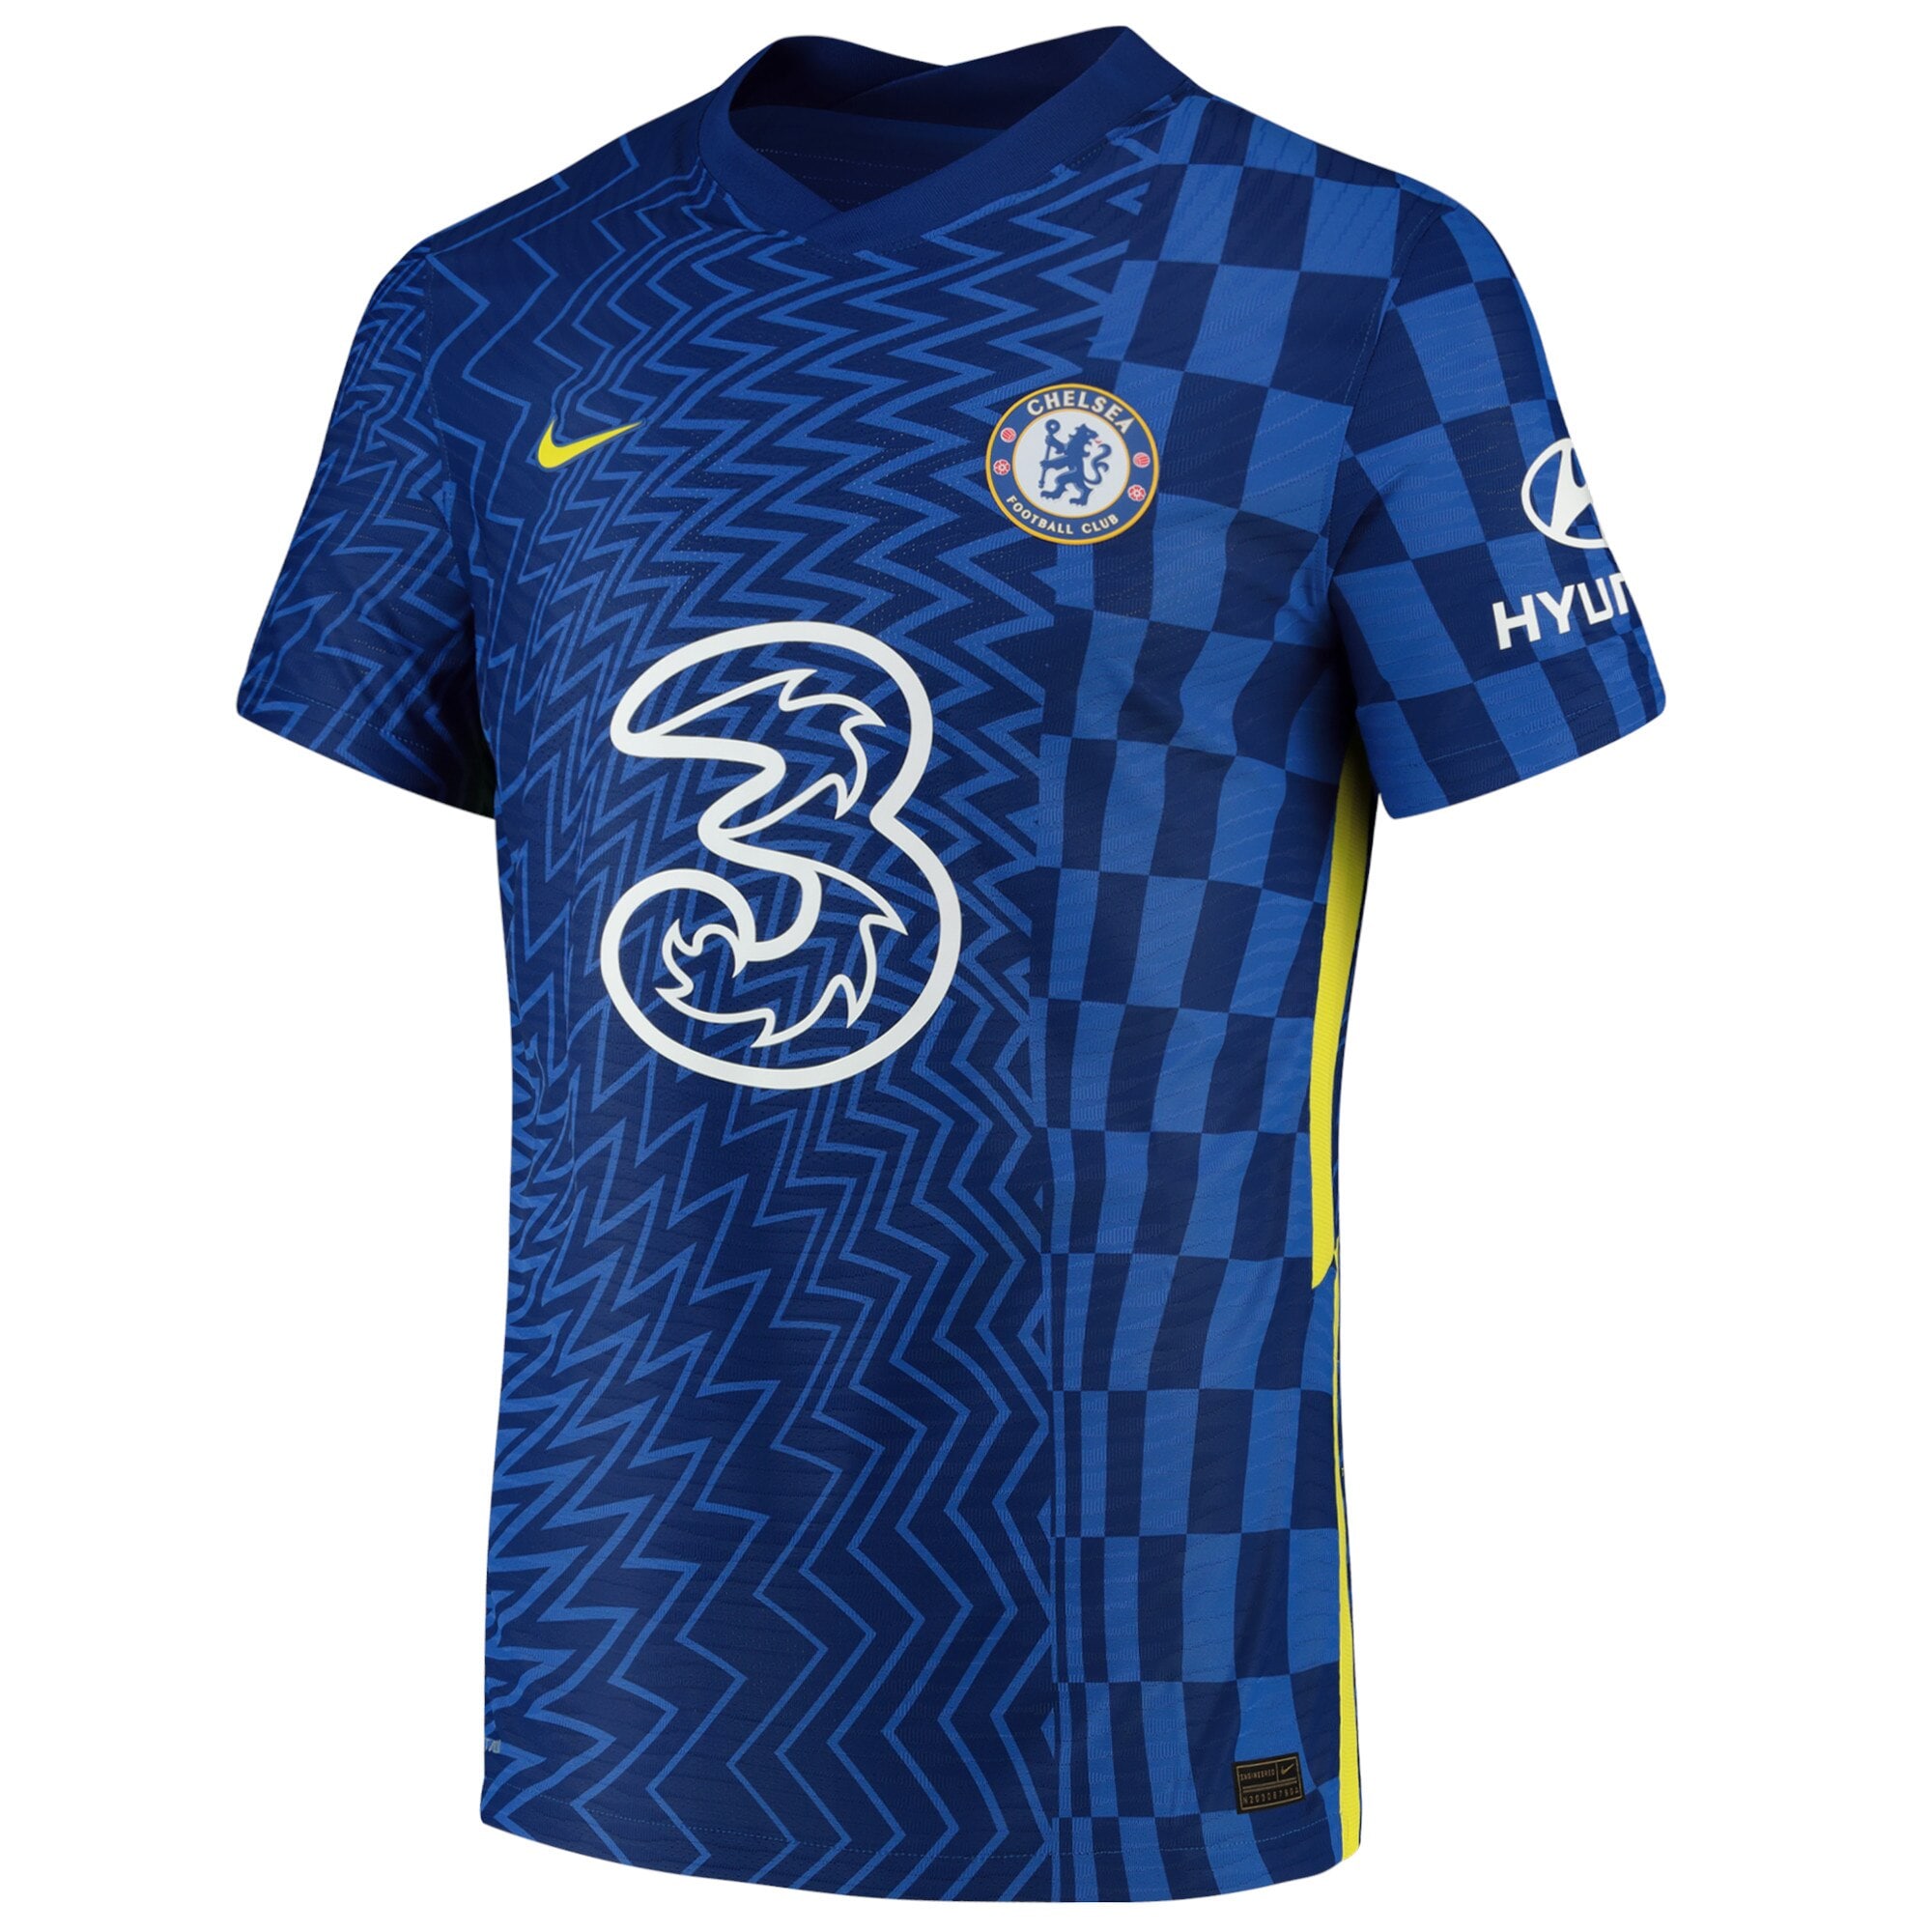 Chelsea Home Vapor Match Shirt 2021-22 with Loftus-Cheek 12 printing